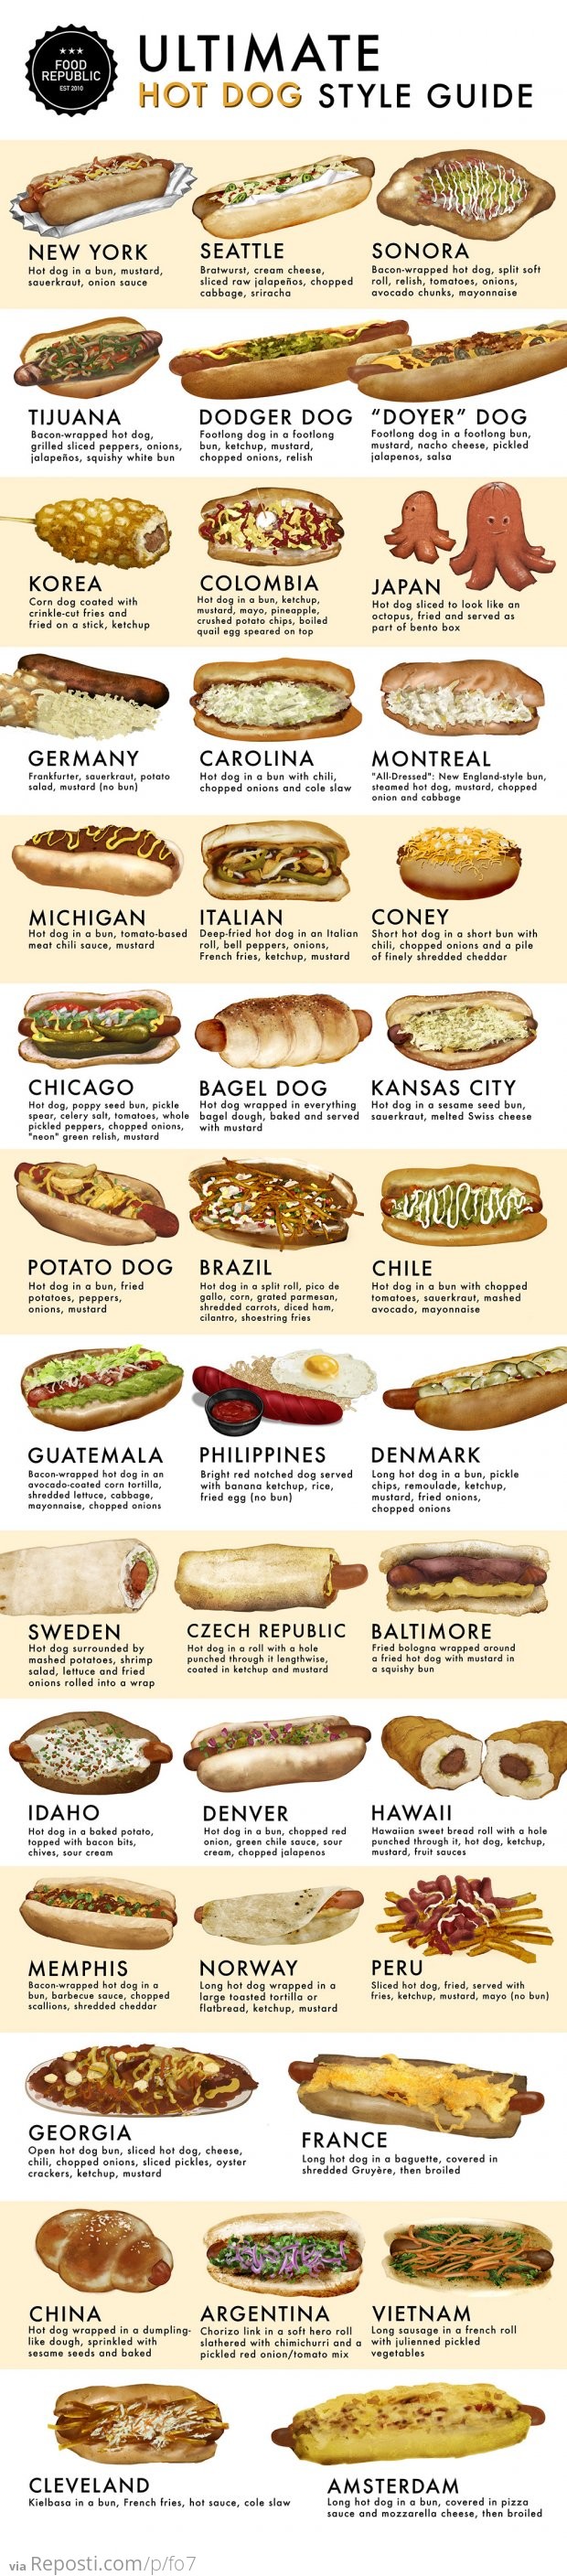 Ultimate Hotdog Style Guide